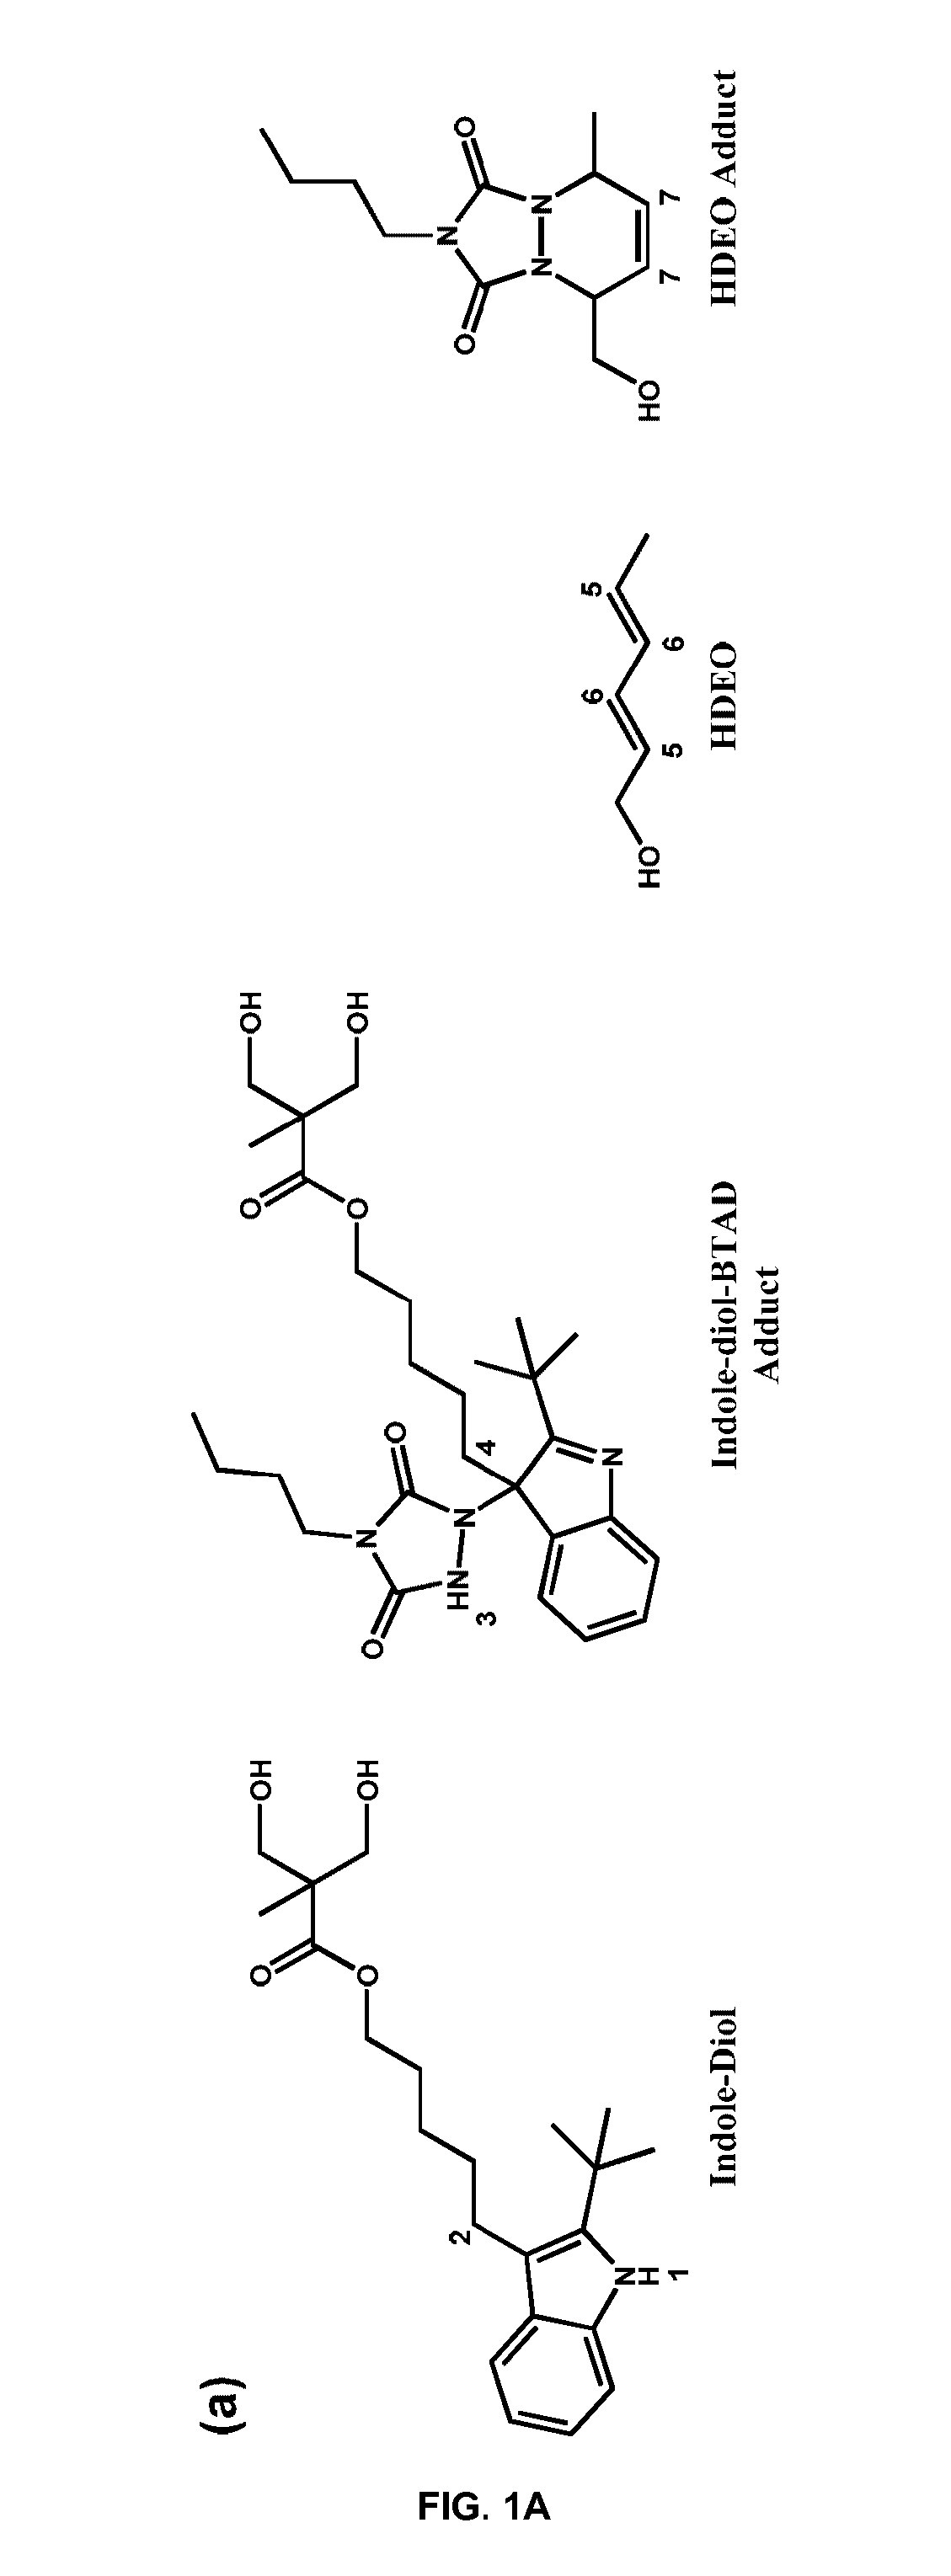 Urazole compounds